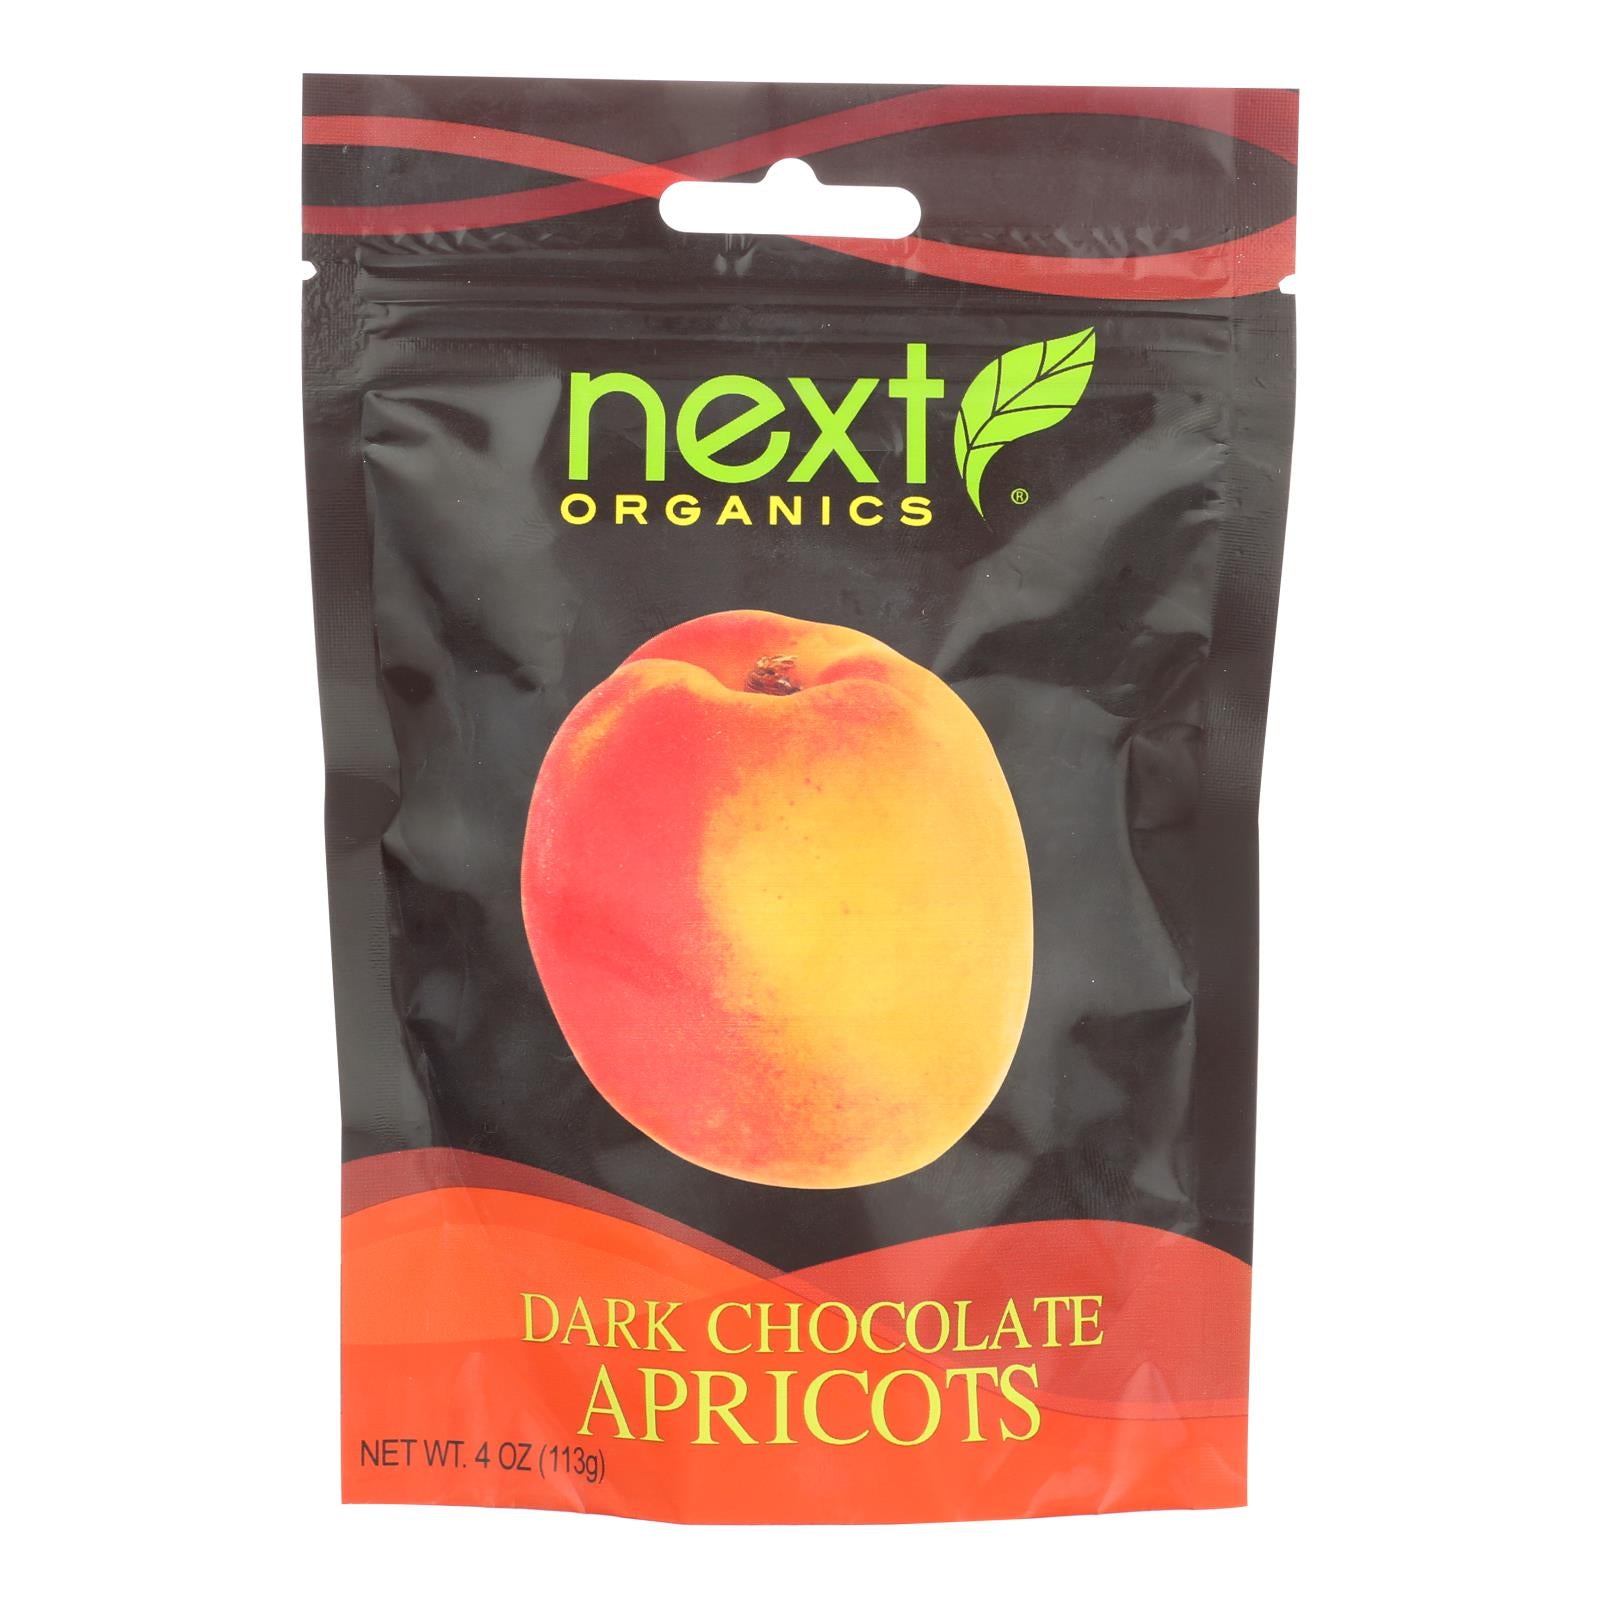 Next Organics Dark Chocolate Apricots  - Case of 6 - 4 OZ